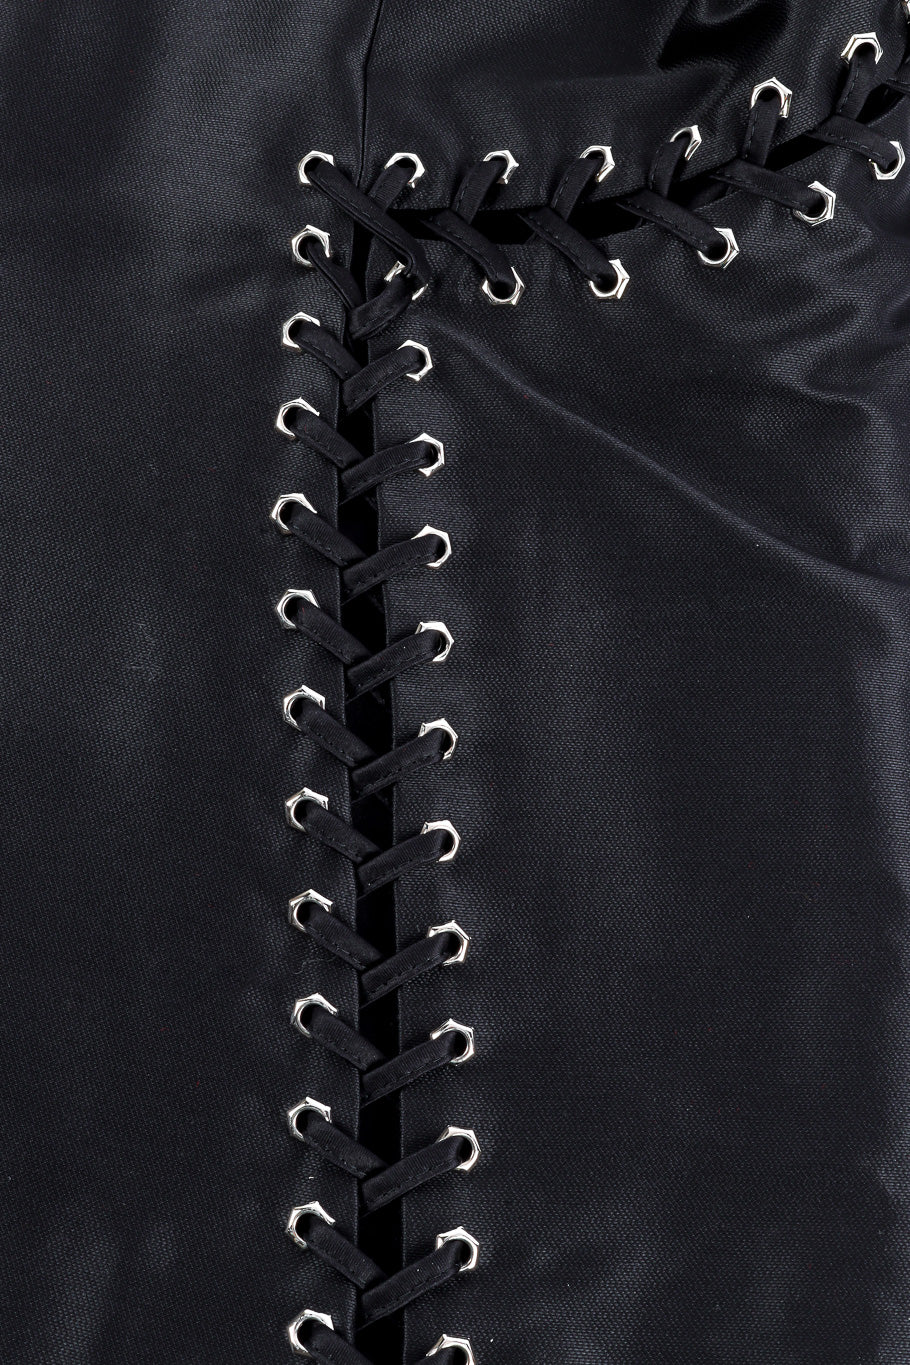 Grommet jacket by Yves Saint Laurent grommet detail  @recessla